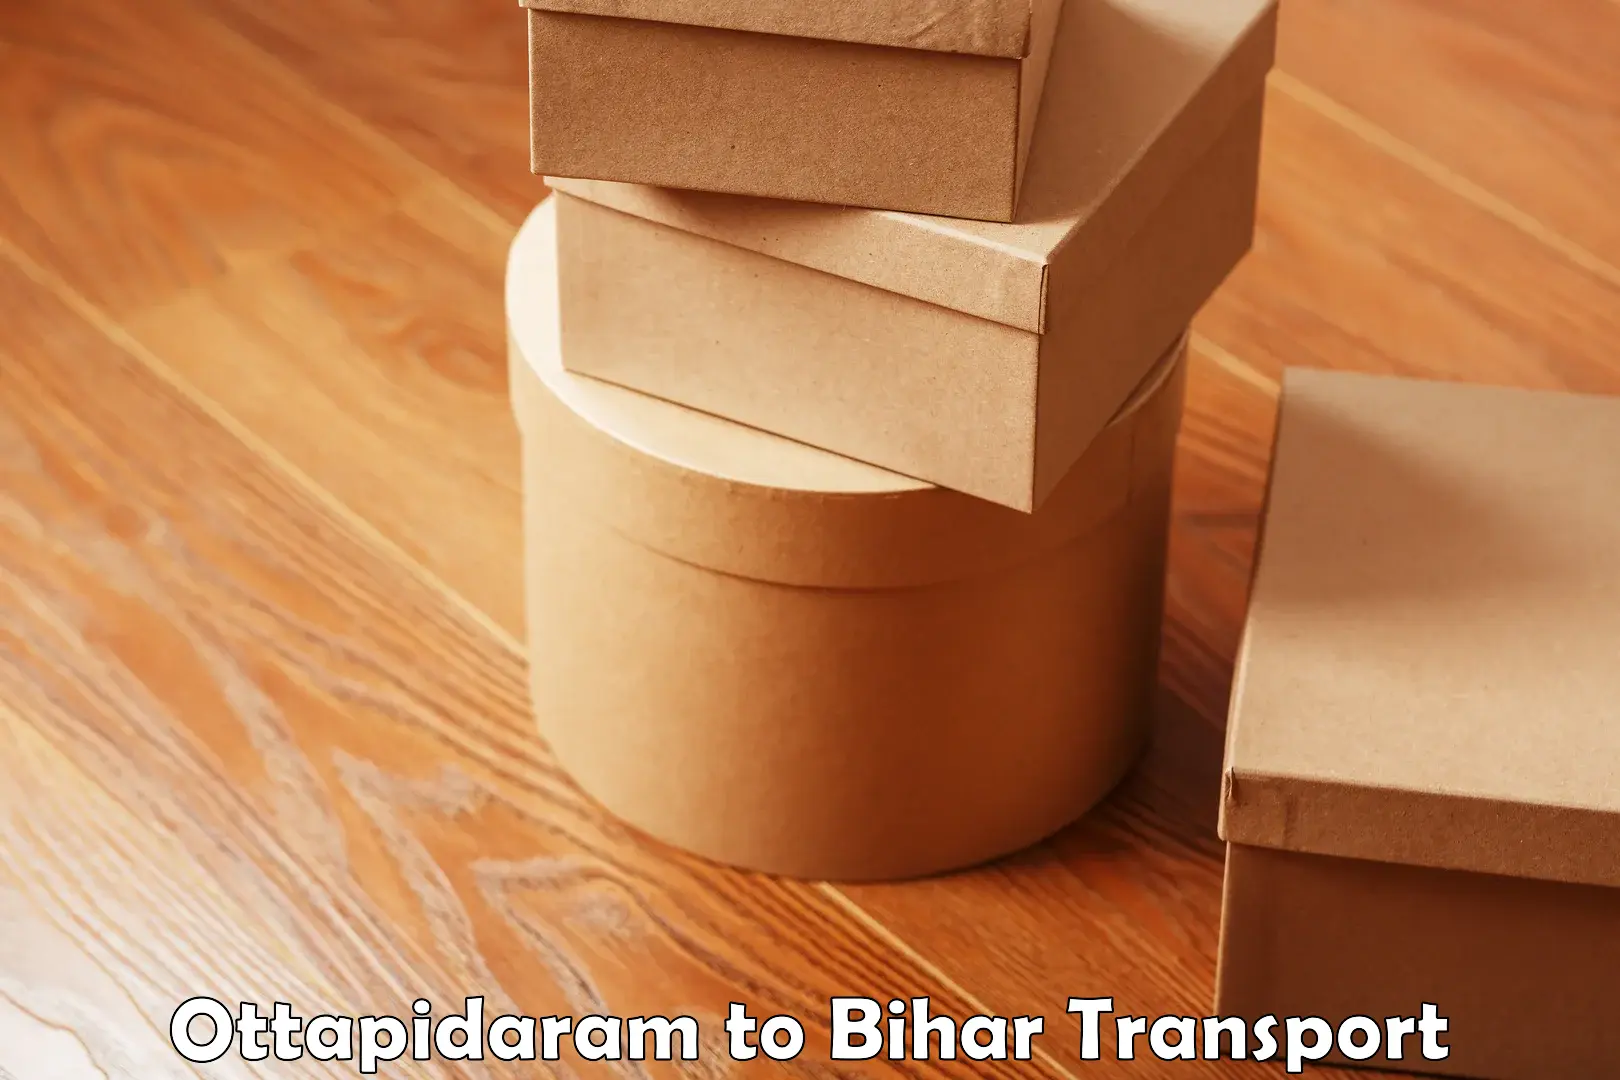 Transport in sharing Ottapidaram to Sultanganj